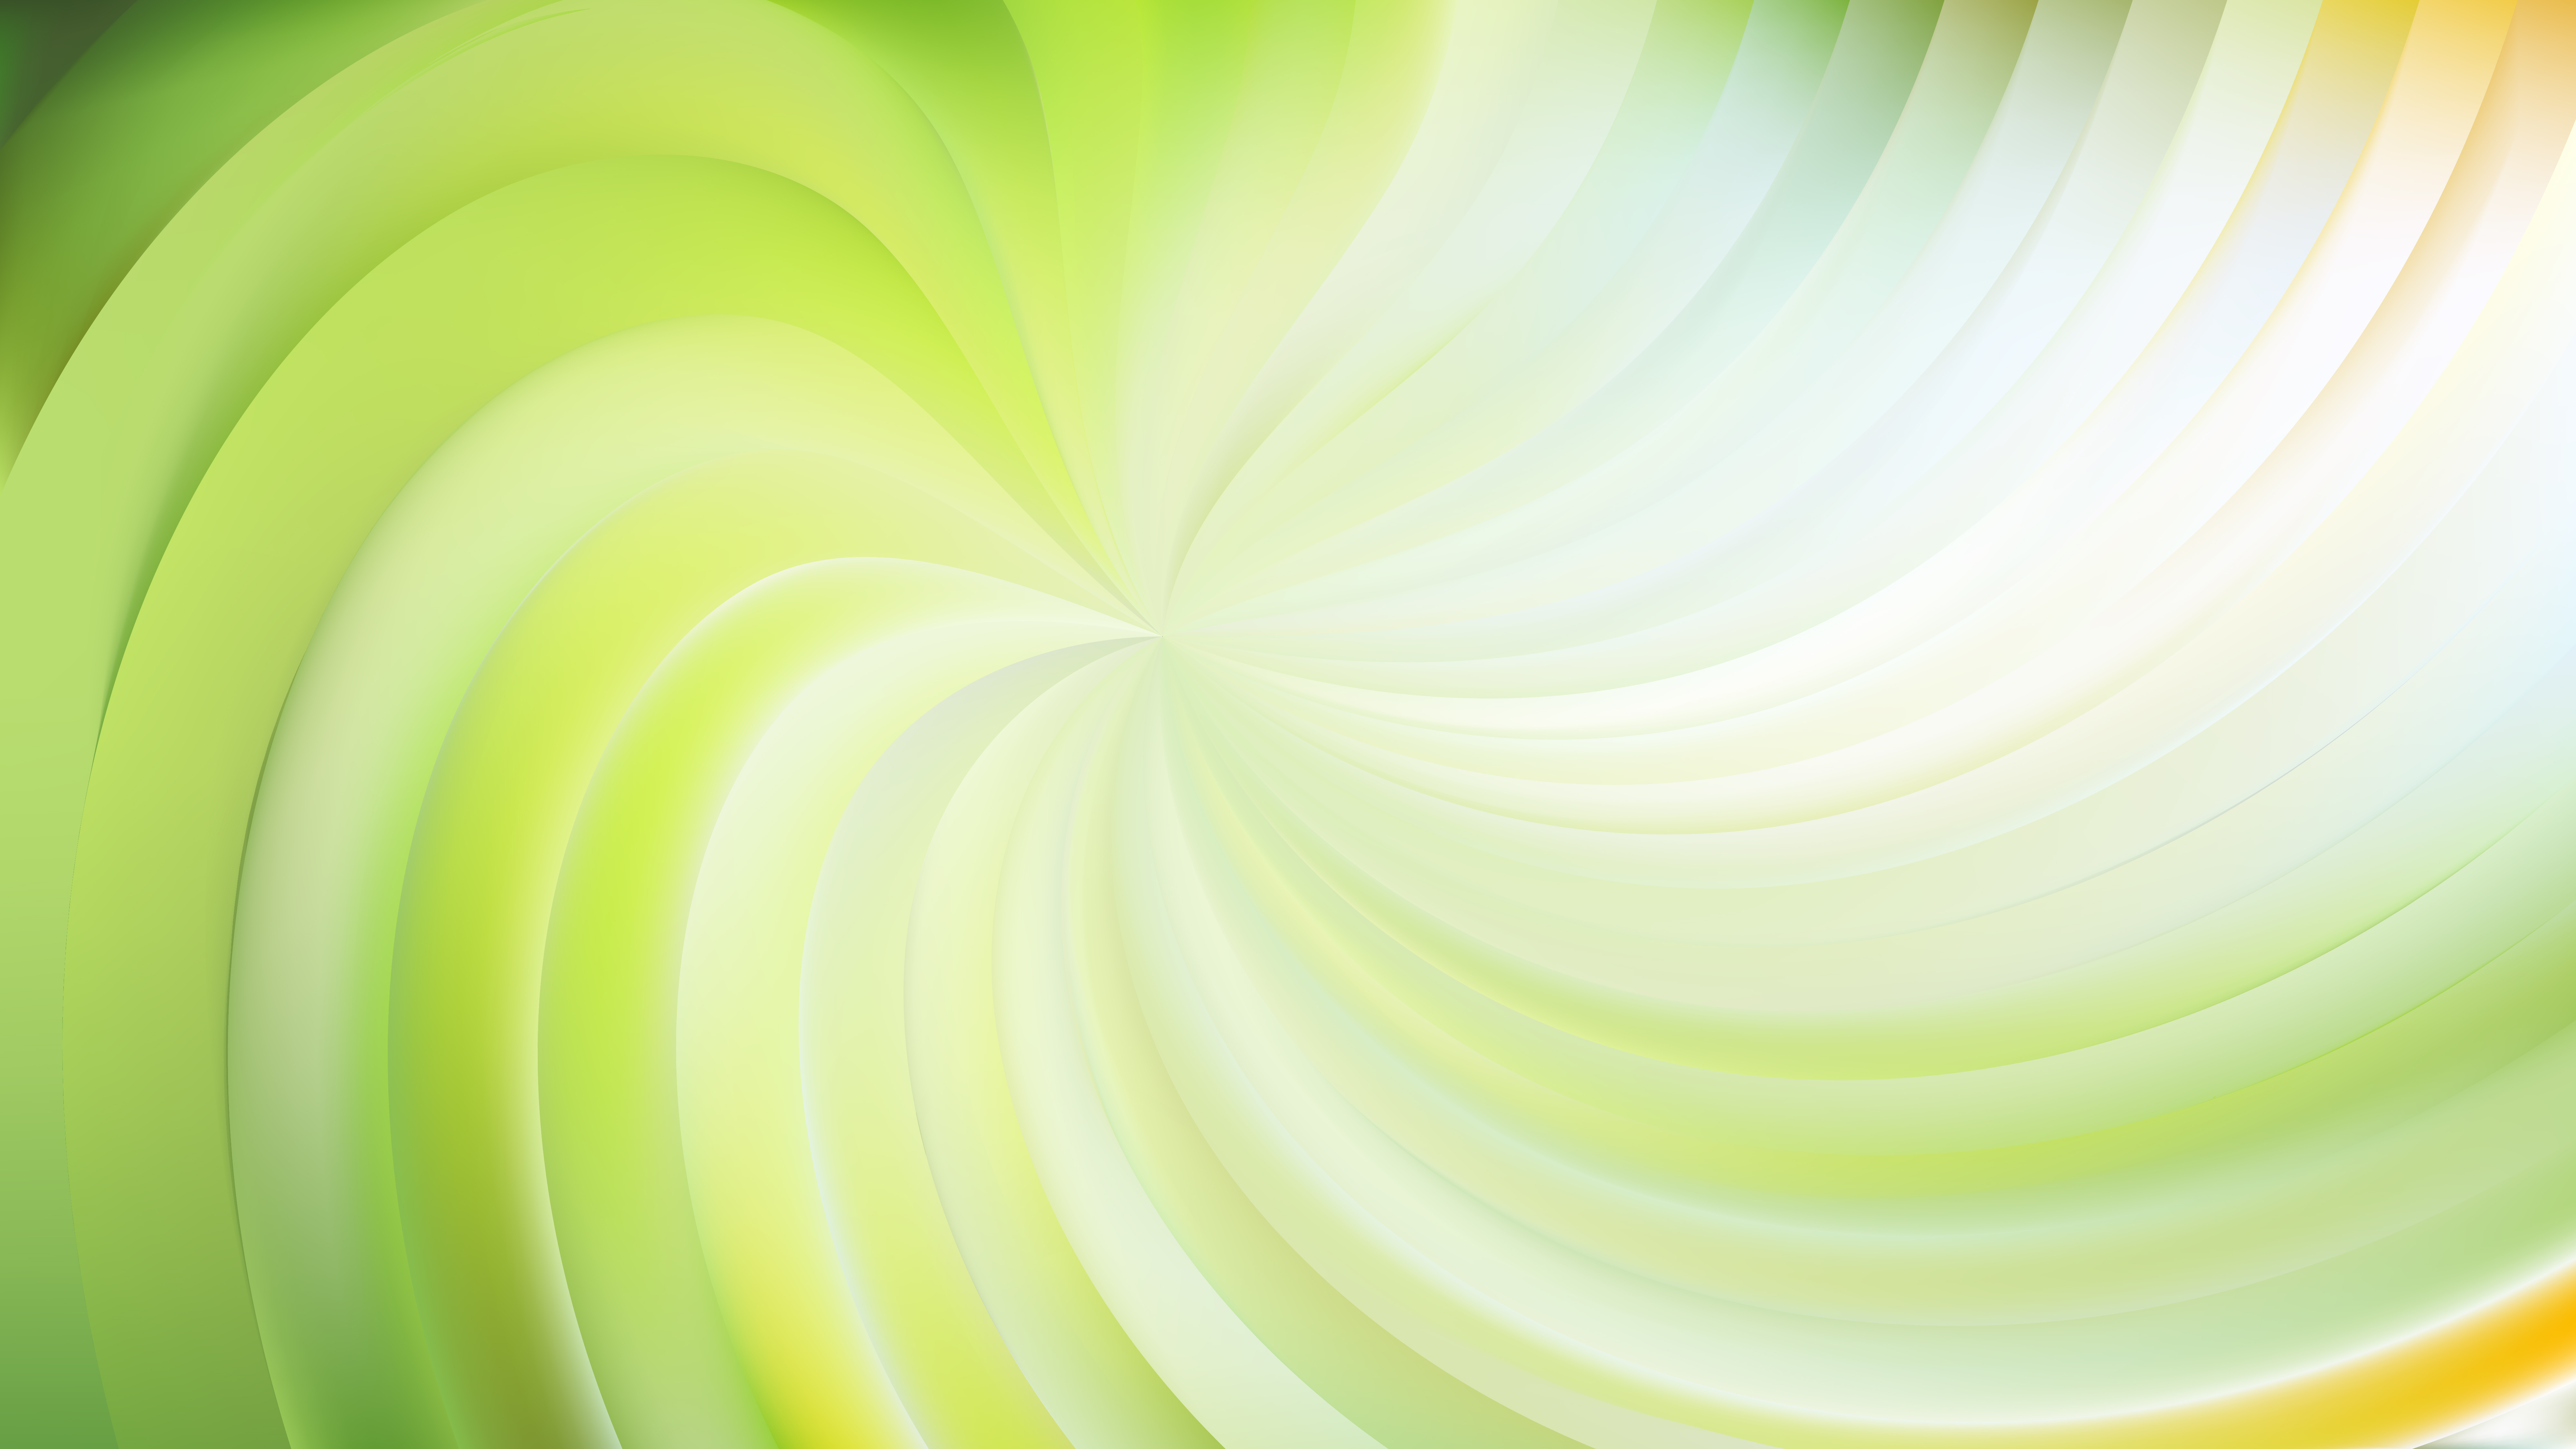 Free Abstract Light Green Swirl Background Vector Illustration